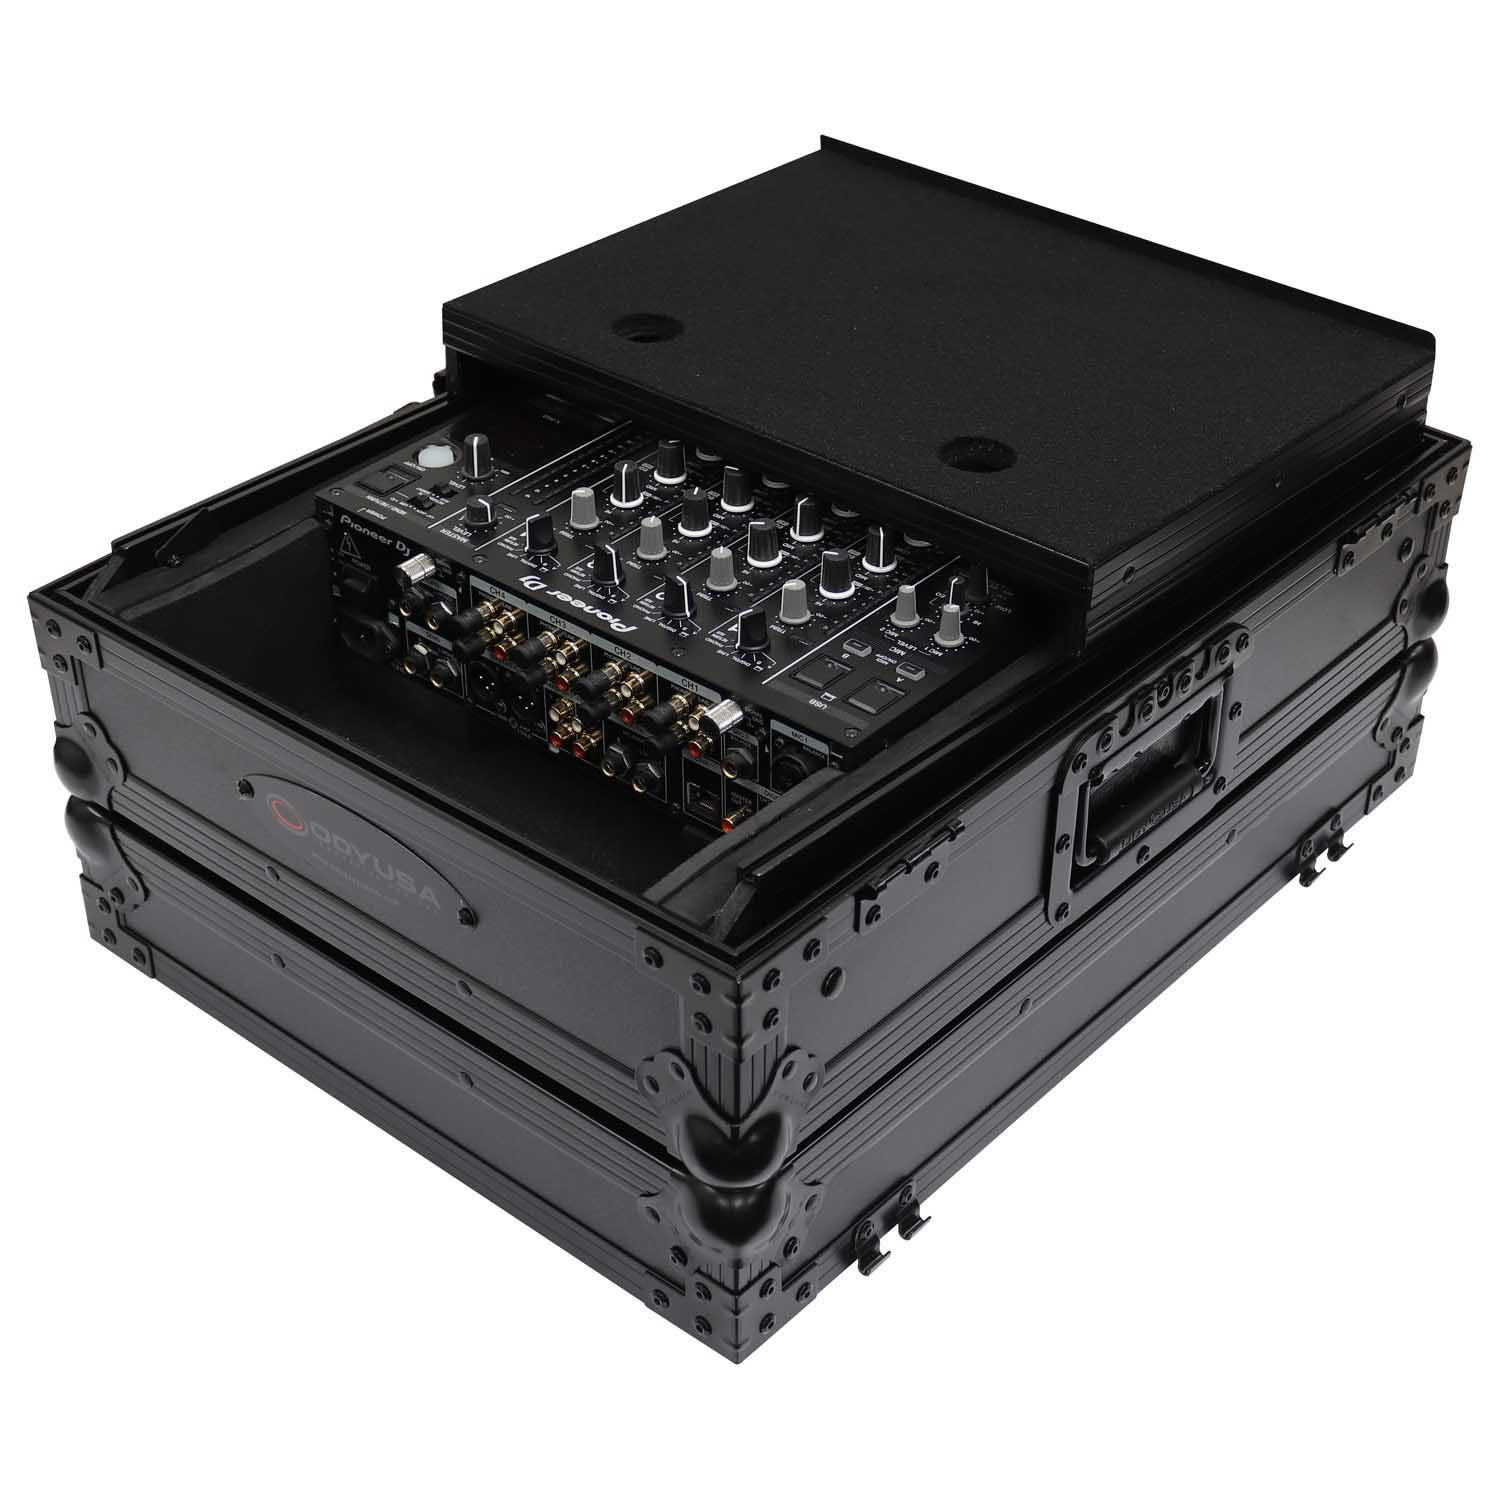 Odyssey FZGS12MX1XDBL 12″ Format DJ Mixer Case with Extra Deep Rear Compartment - Black - Hollywood DJ